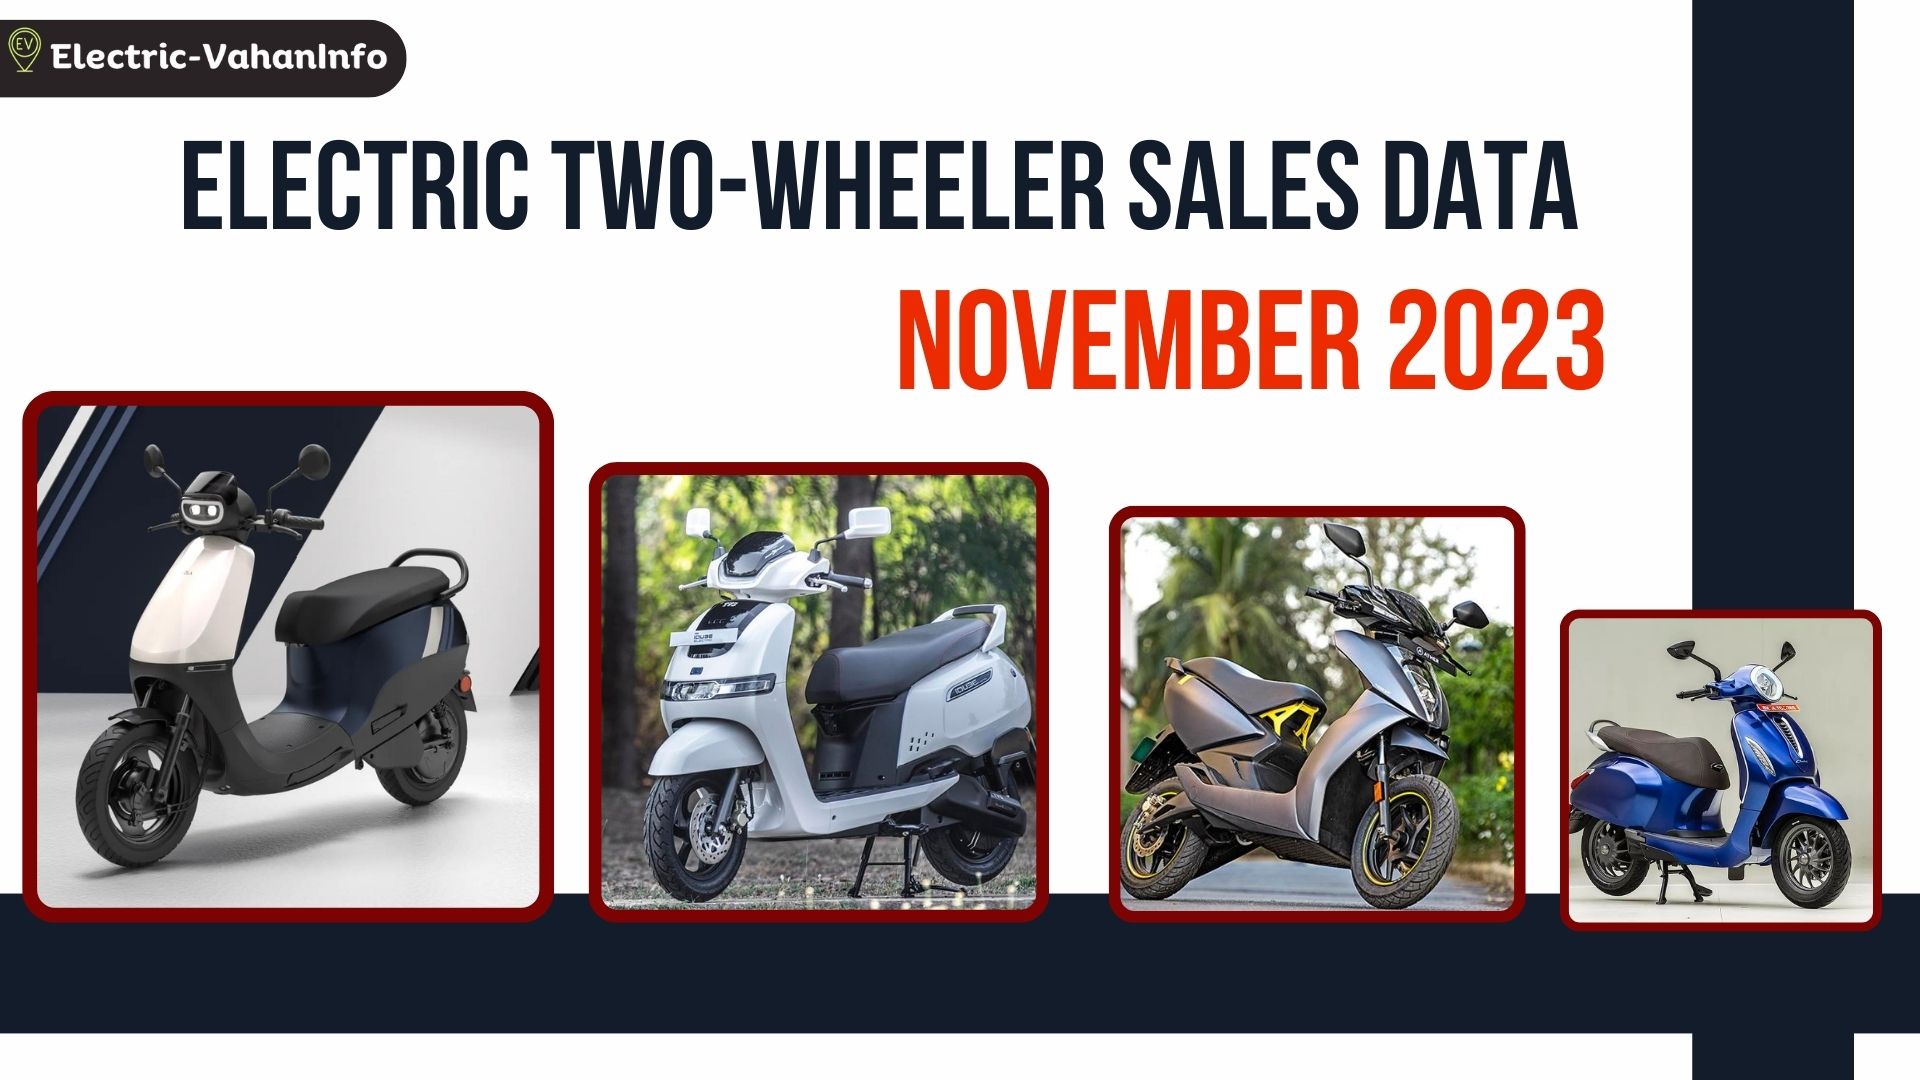 https://electric-vahaninfo.com/electric-two-wheeler-sales-data-november-2023/